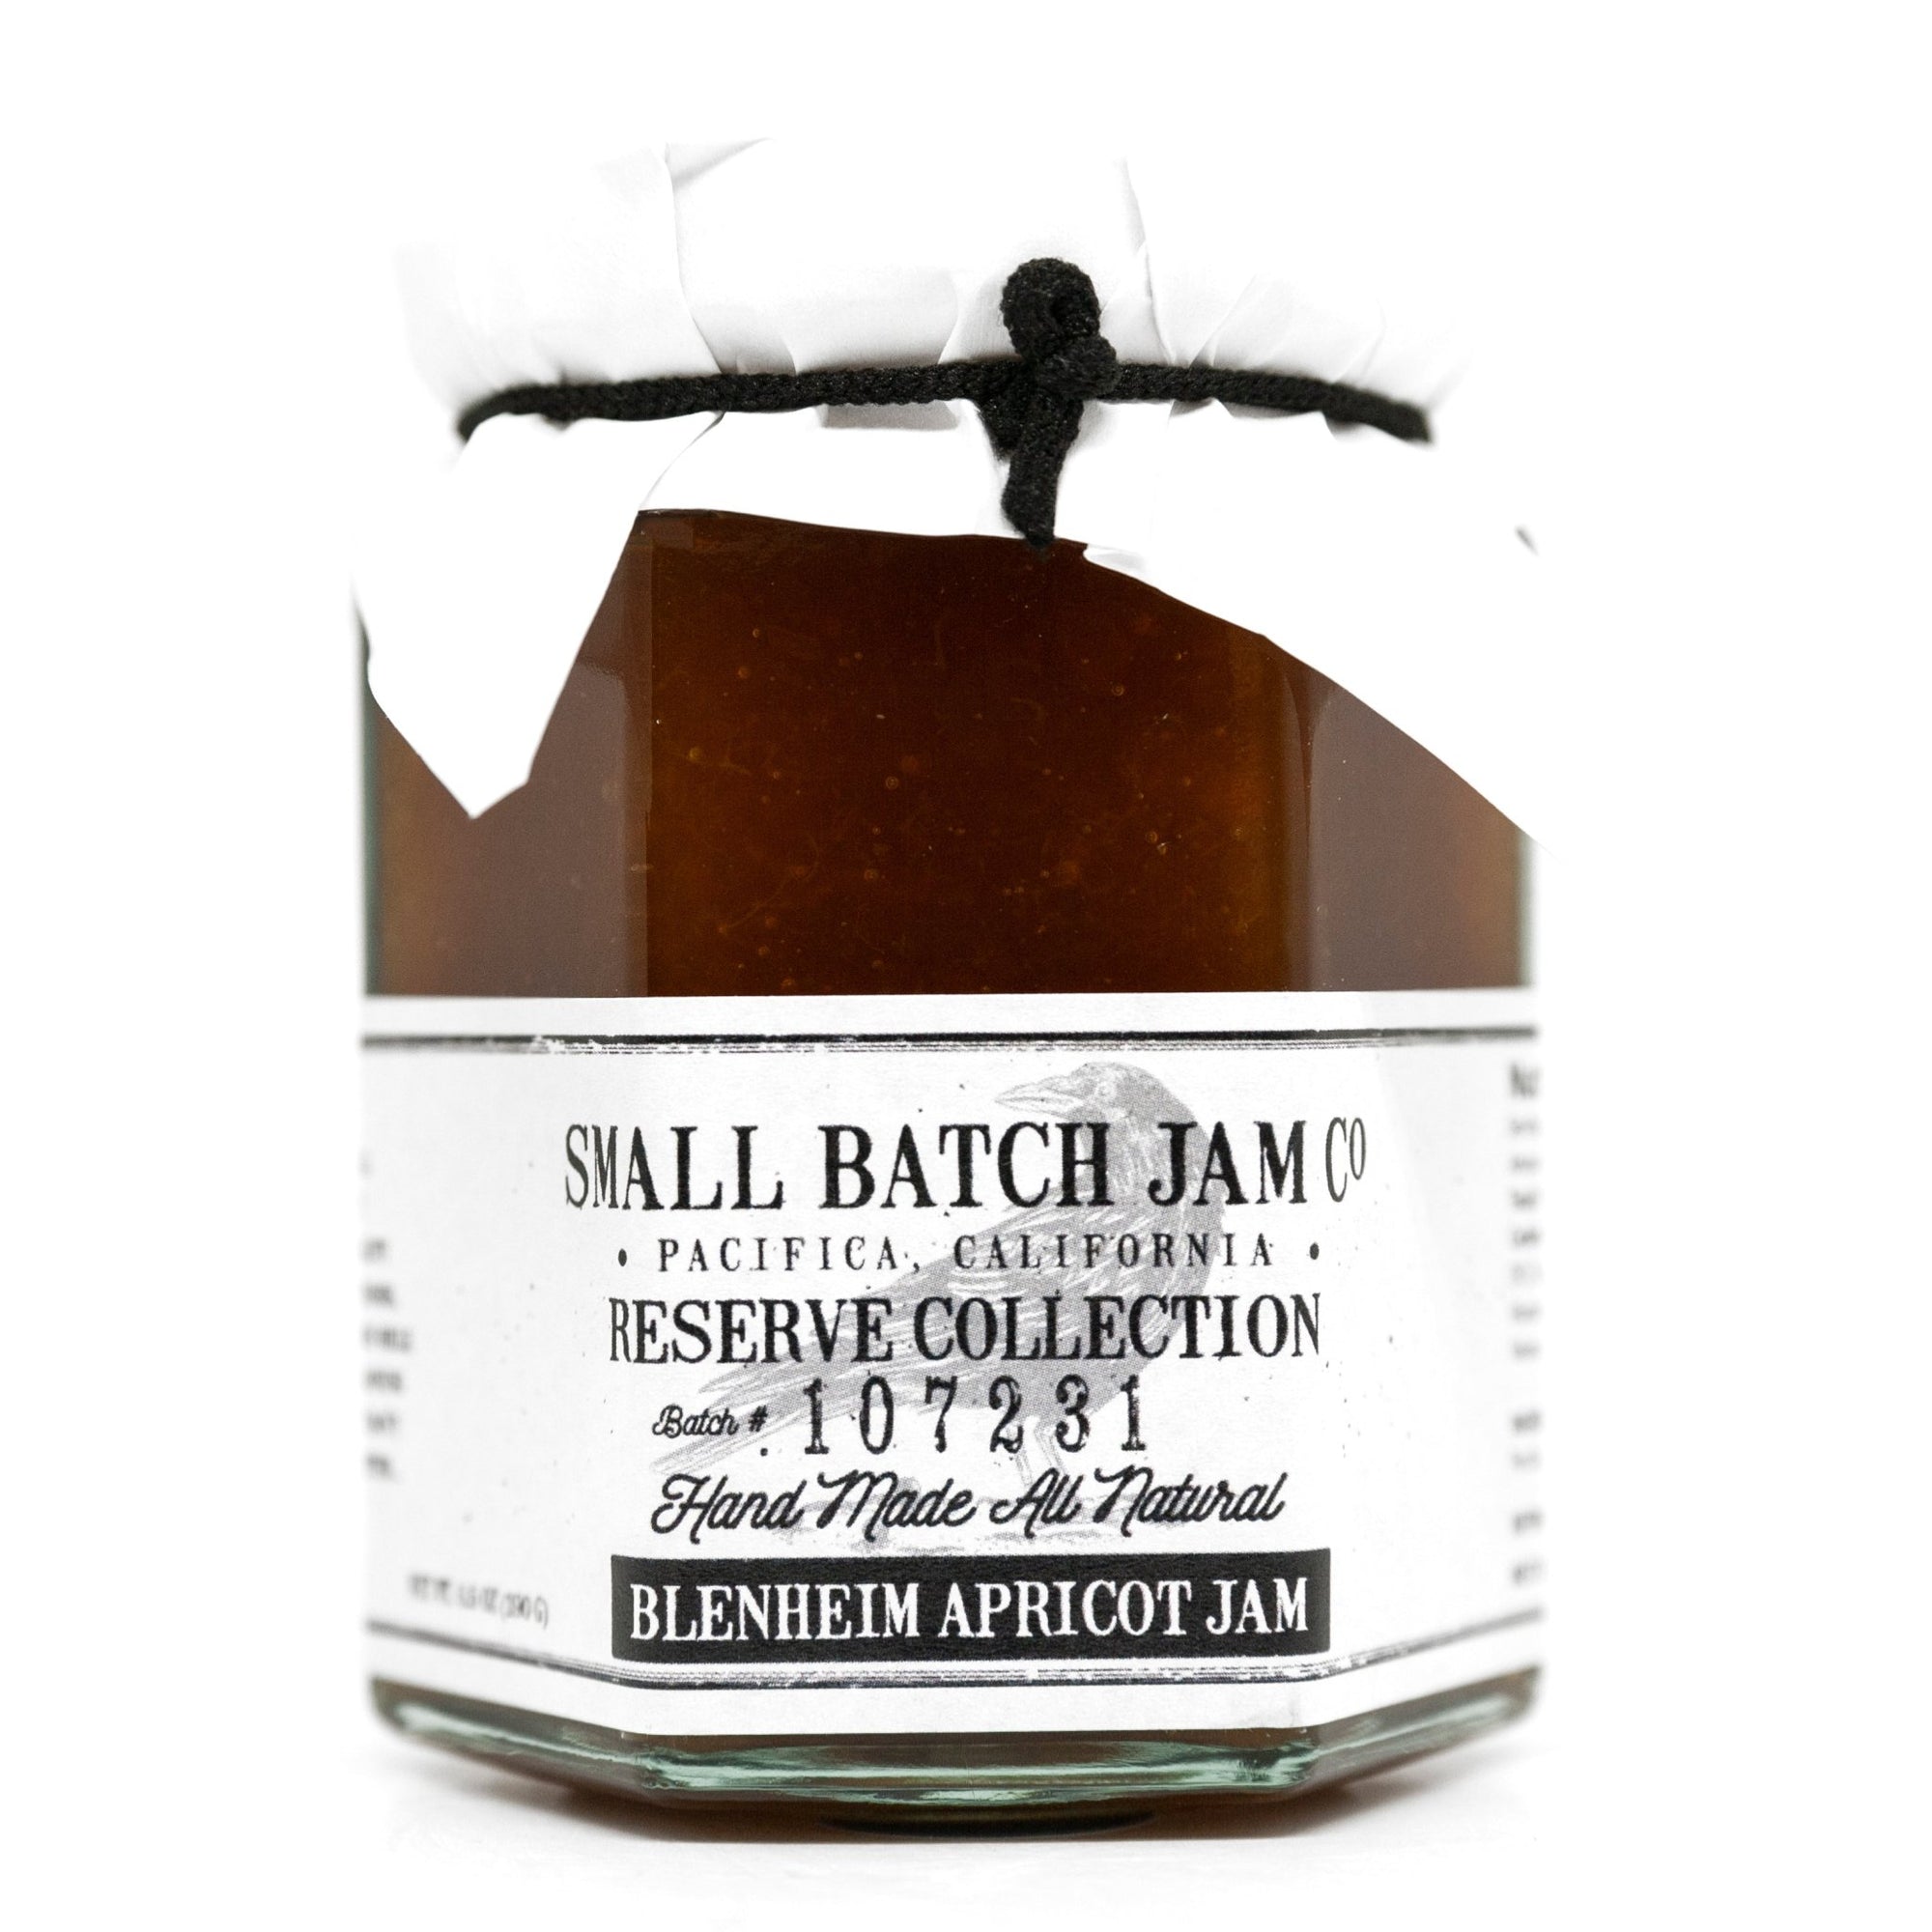 Blenheim Apricot Jam - Reserve Collection - Small Batch Jam Co